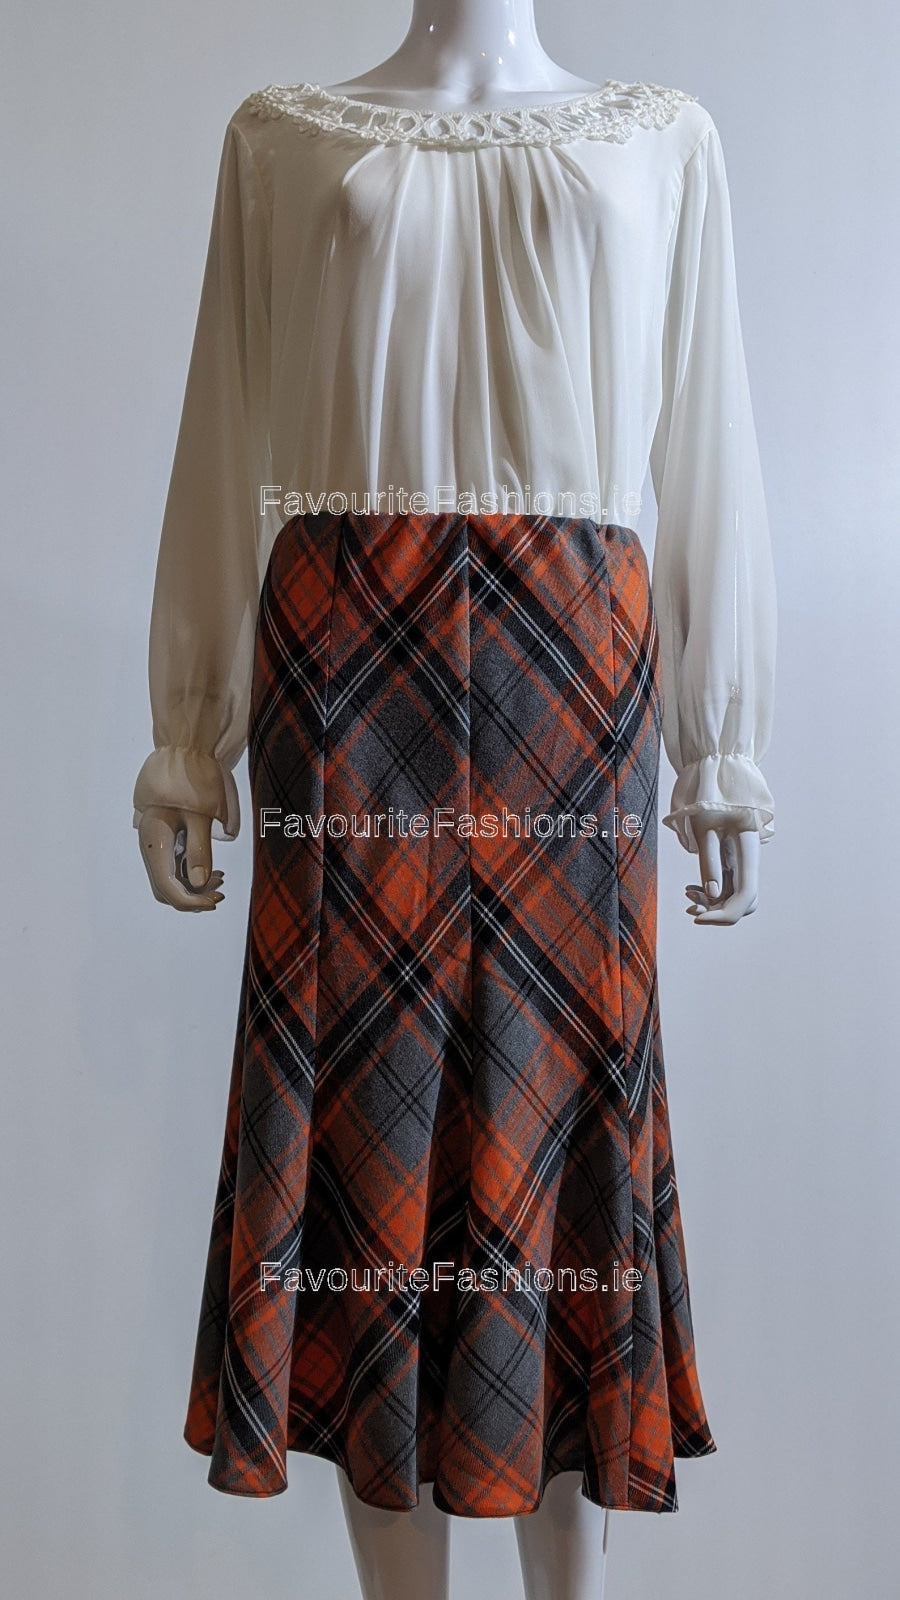 Grey & Orange Elasticated Lined A-Line Checked Tartan Skirt